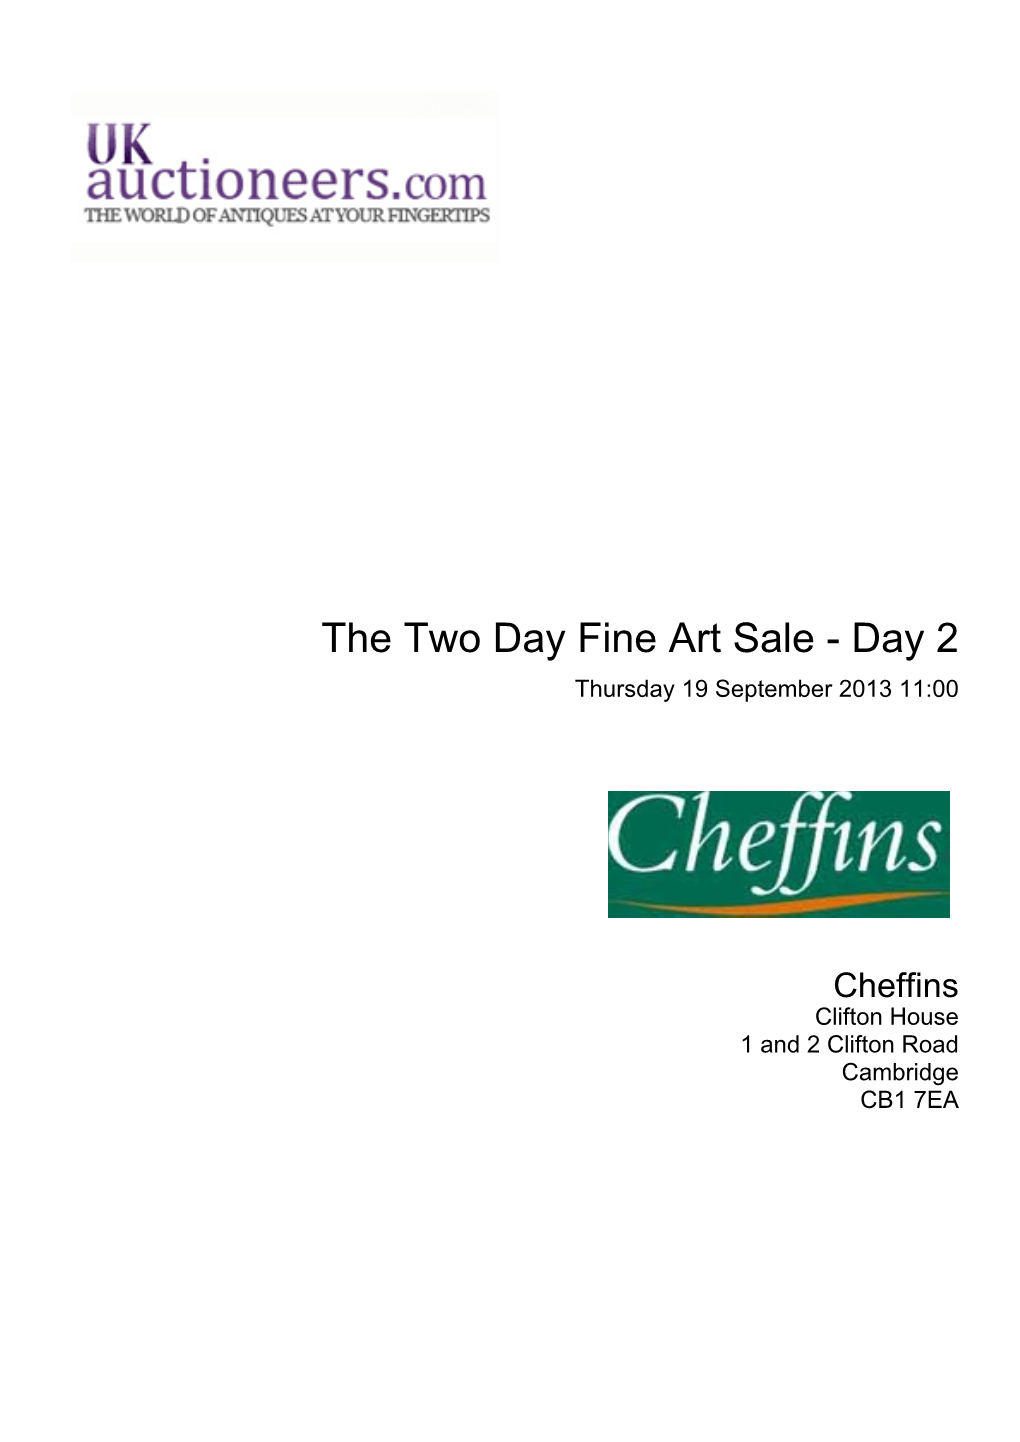 The Two Day Fine Art Sale - Day 2 Thursday 19 September 2013 11:00